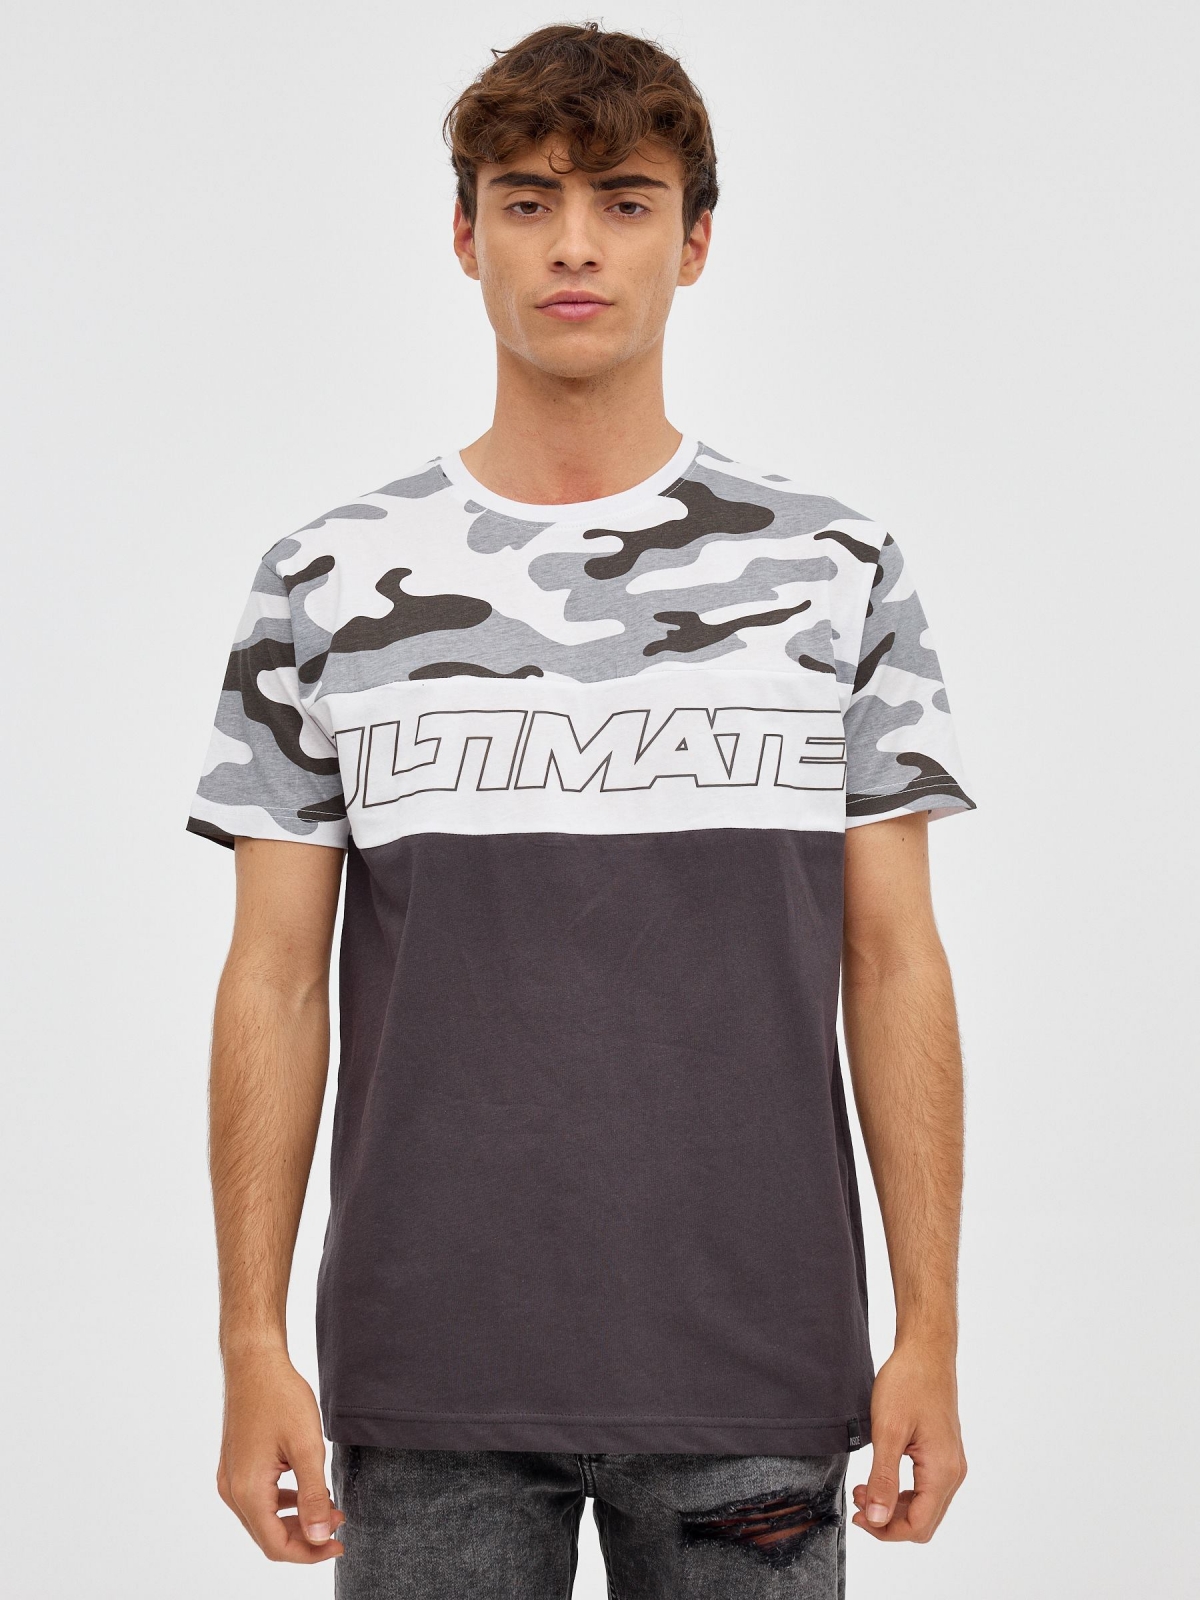 Camiseta multiestampado gris oscuro vista media frontal